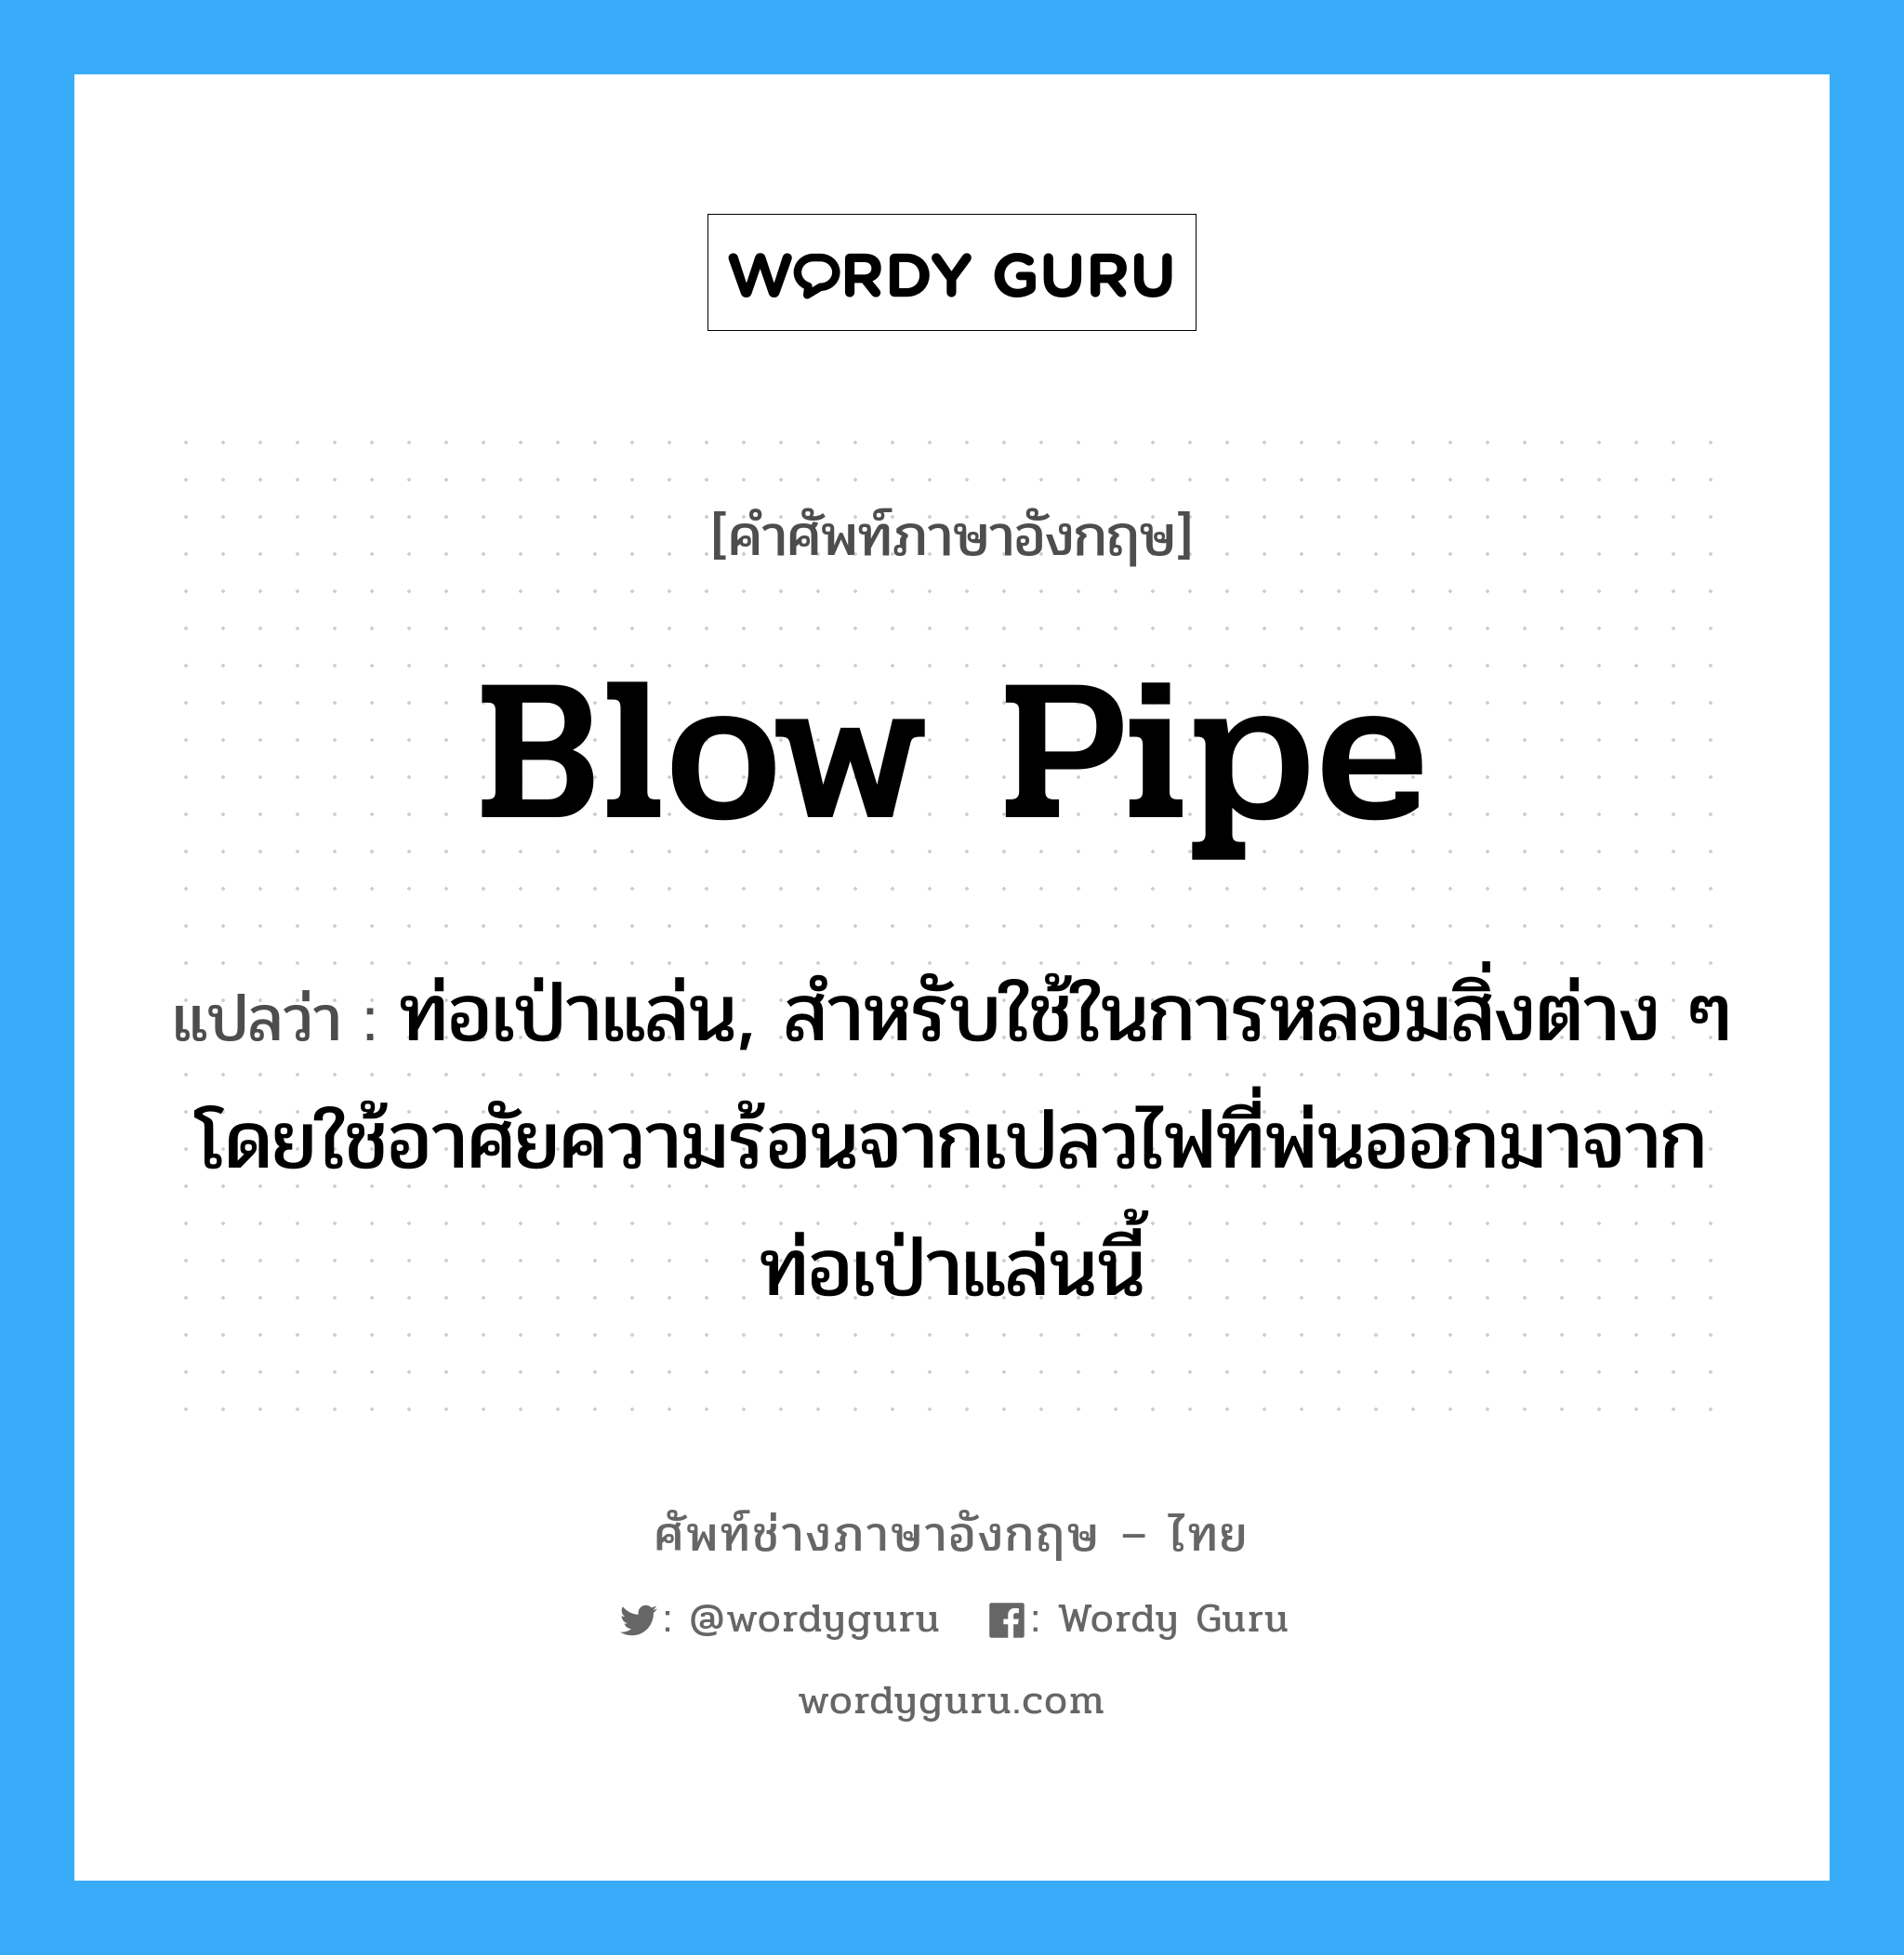 blow-pipe แปลว่า?, คำศัพท์ช่างภาษาอังกฤษ - ไทย blow pipe คำศัพท์ภาษาอังกฤษ blow pipe แปลว่า ท่อเป่าแล่น, สำหรับใช้ในการหลอมสิ่งต่าง ๆ โดยใช้อาศัยความร้อนจากเปลวไฟที่พ่นออกมาจากท่อเป่าแล่นนี้